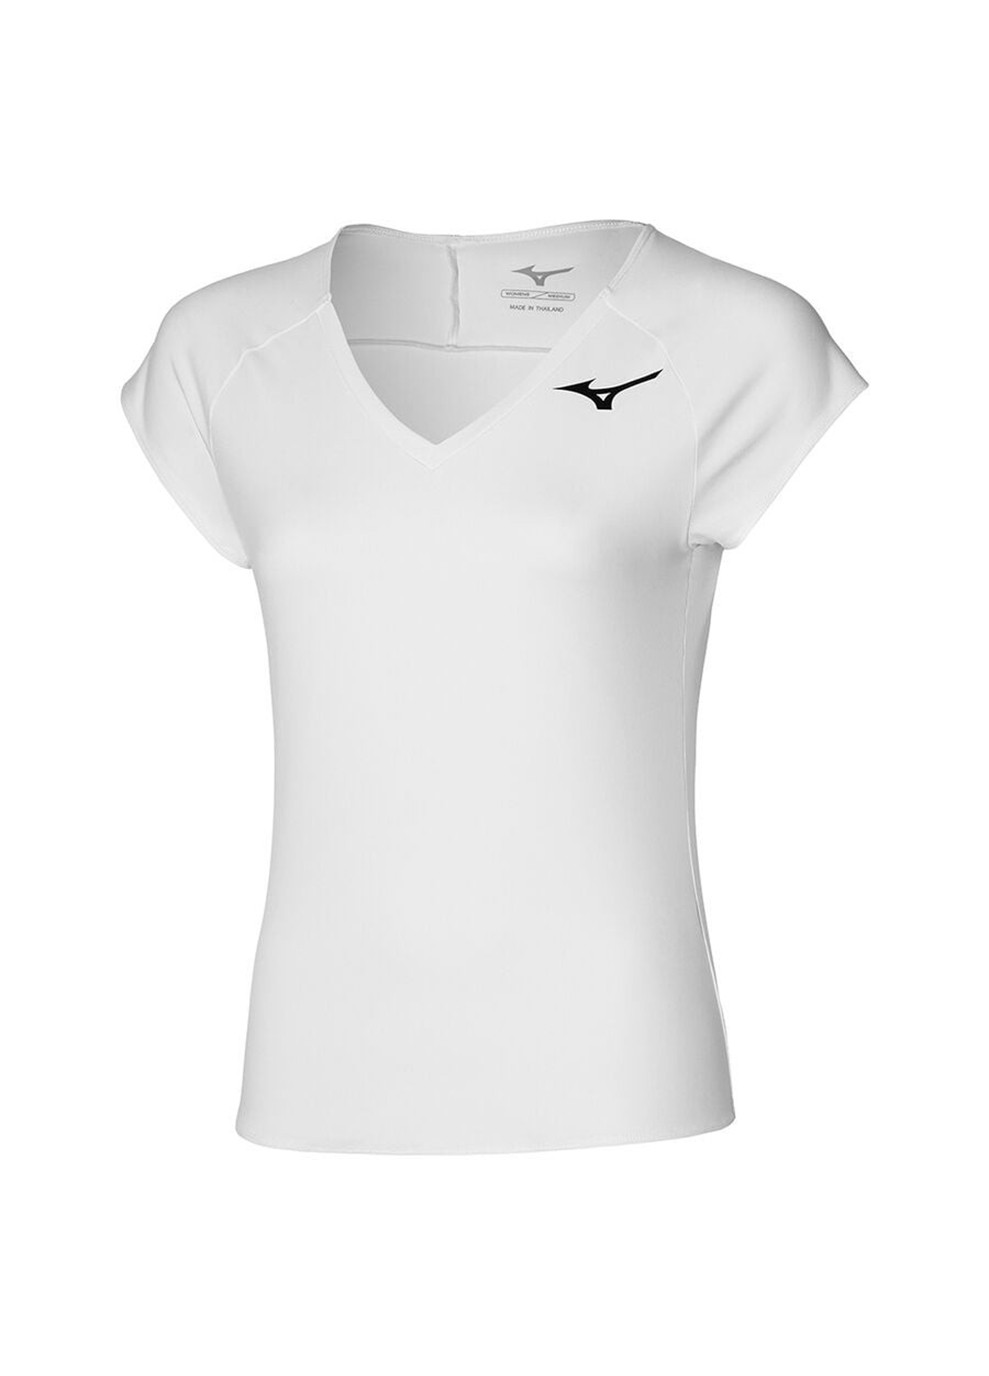 Белая демисезон женская футболка tee белый 62ga1211-01 Mizuno